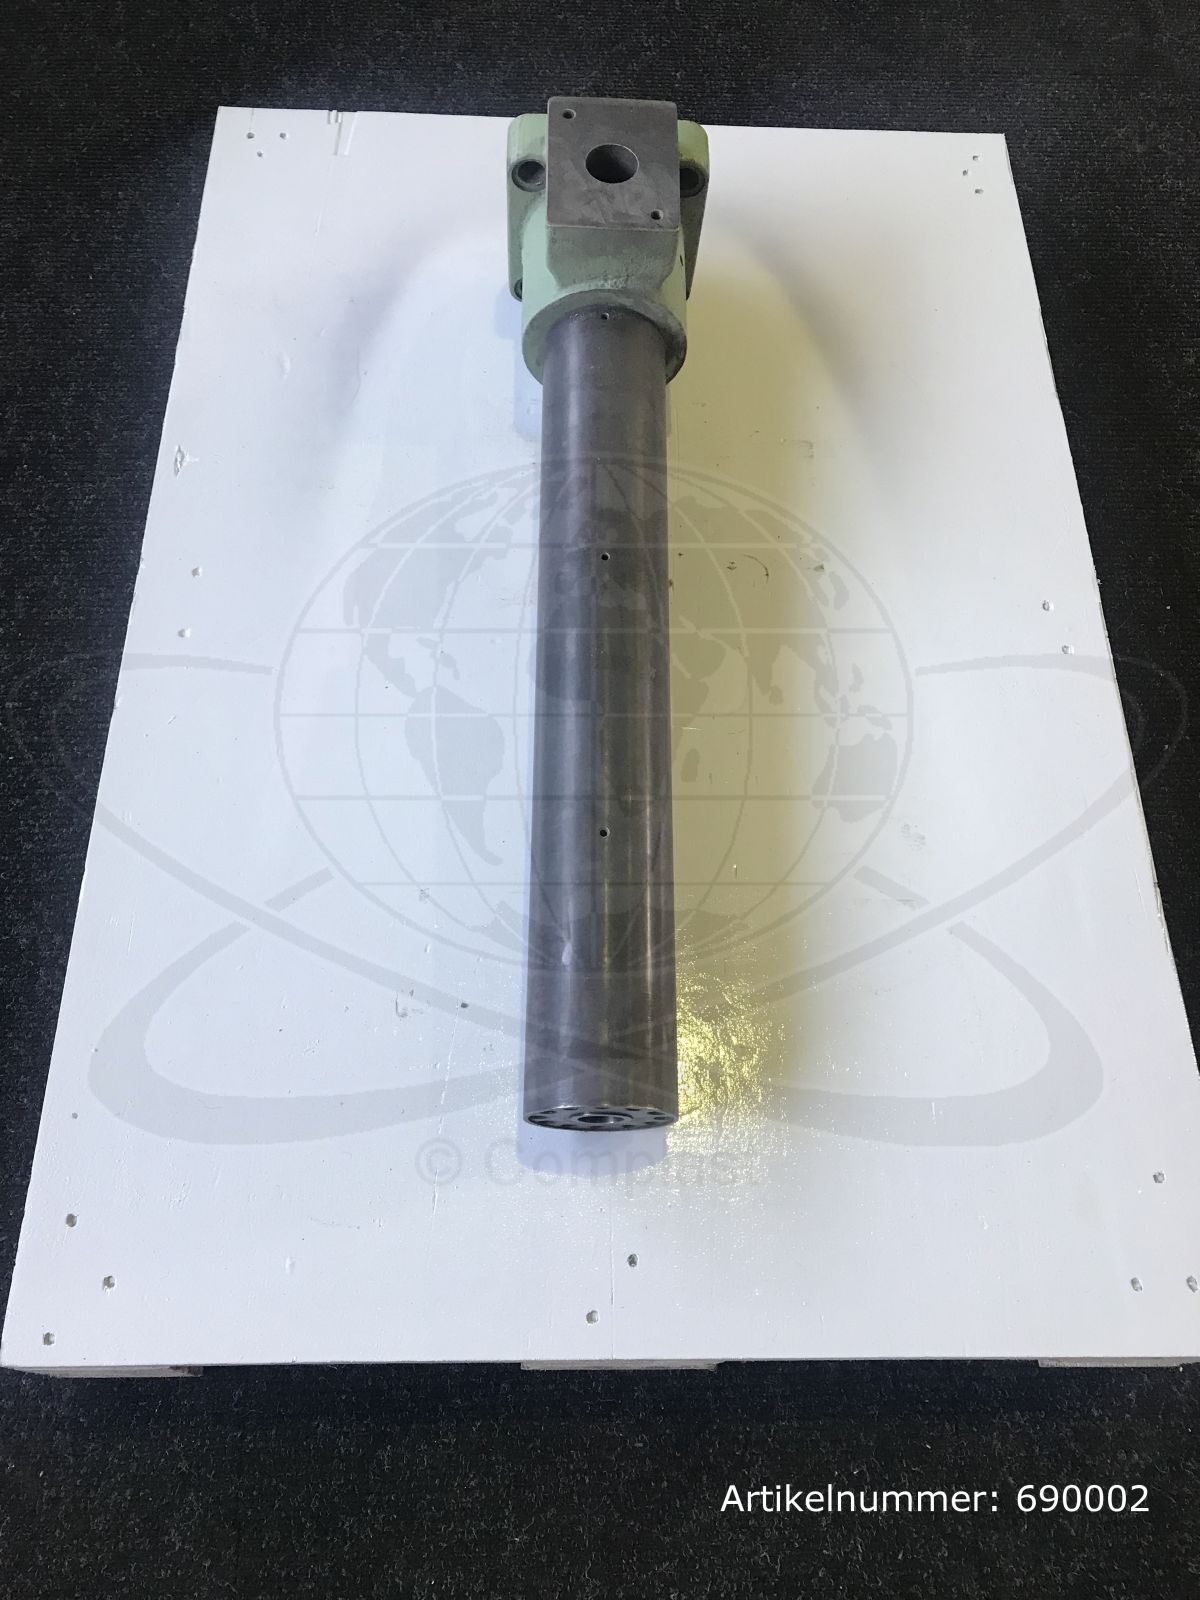 Ferromatik Milacron Plastifizierzylinder IU170, Ø 30 mm